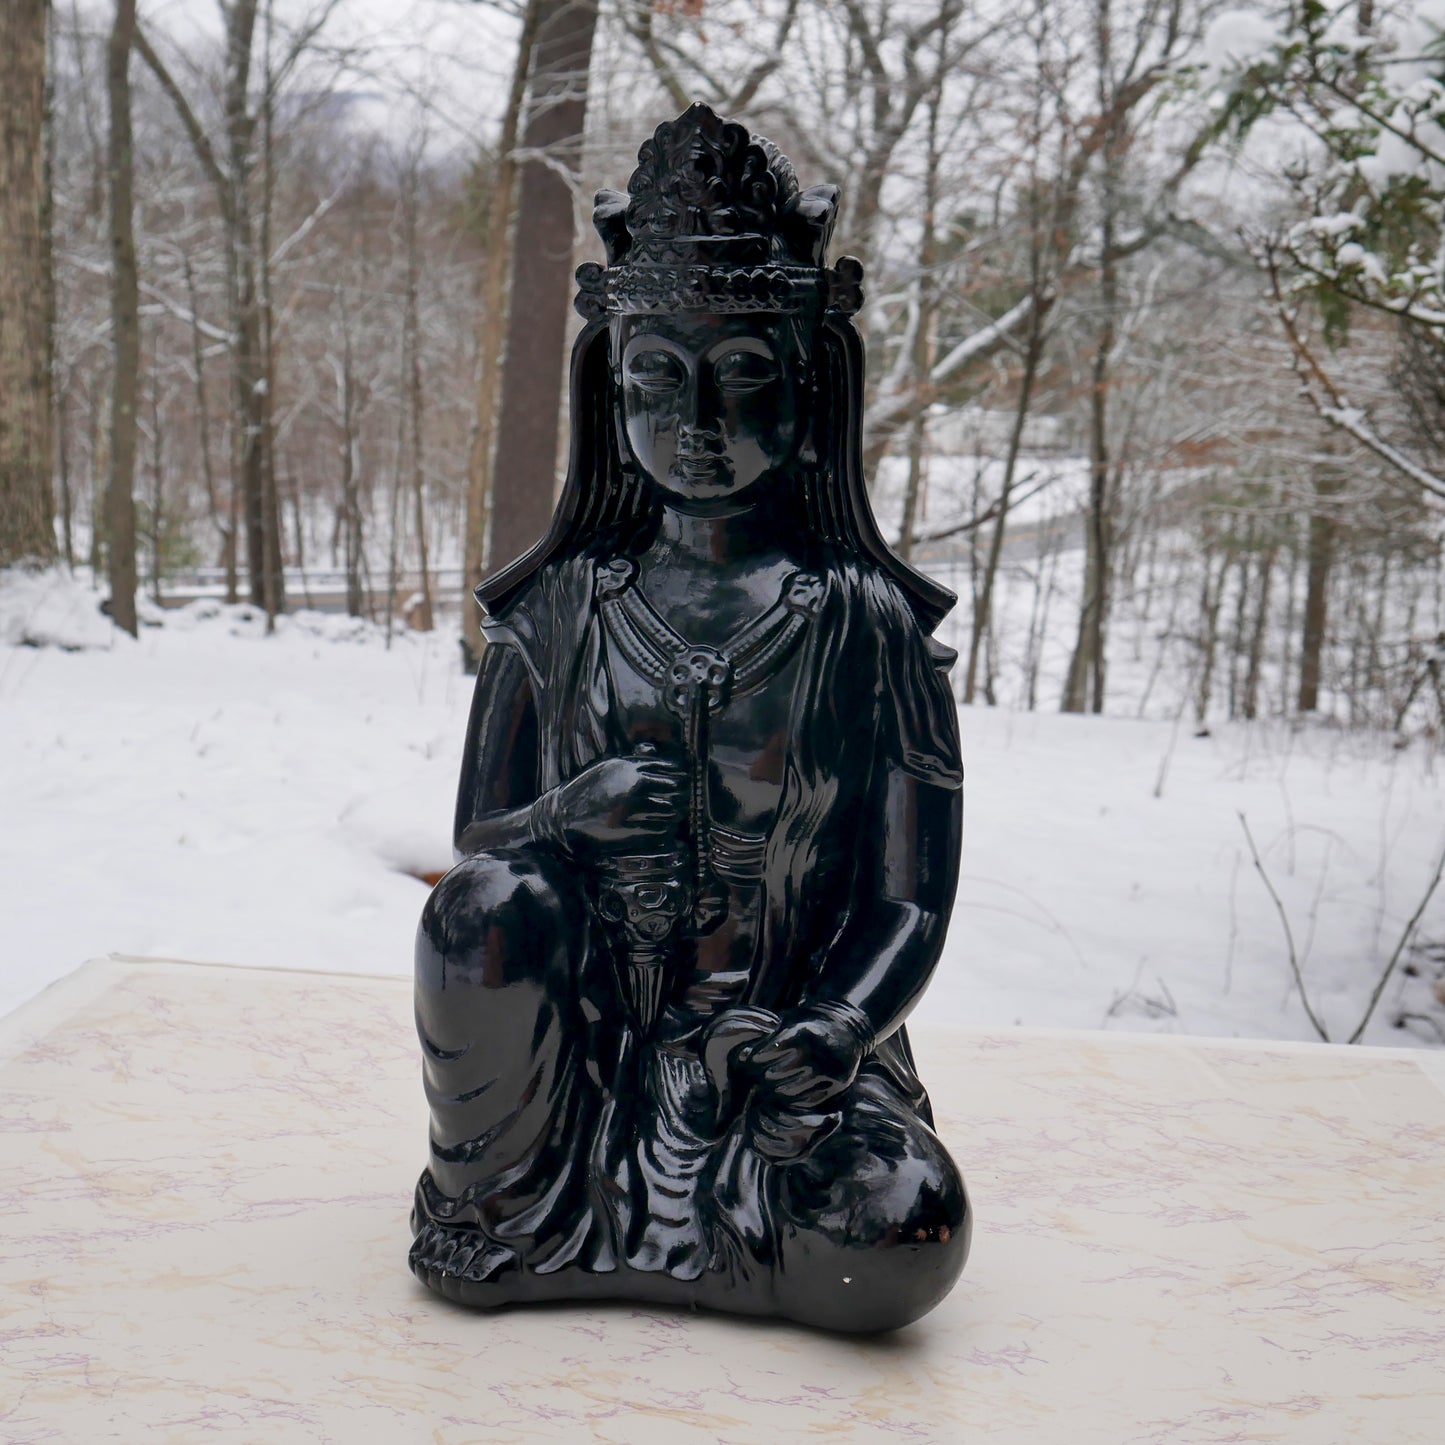 Black Ceramic Chinese Guanyin Statue | Bodhisattva Quan Yin In Meditation 14.25"